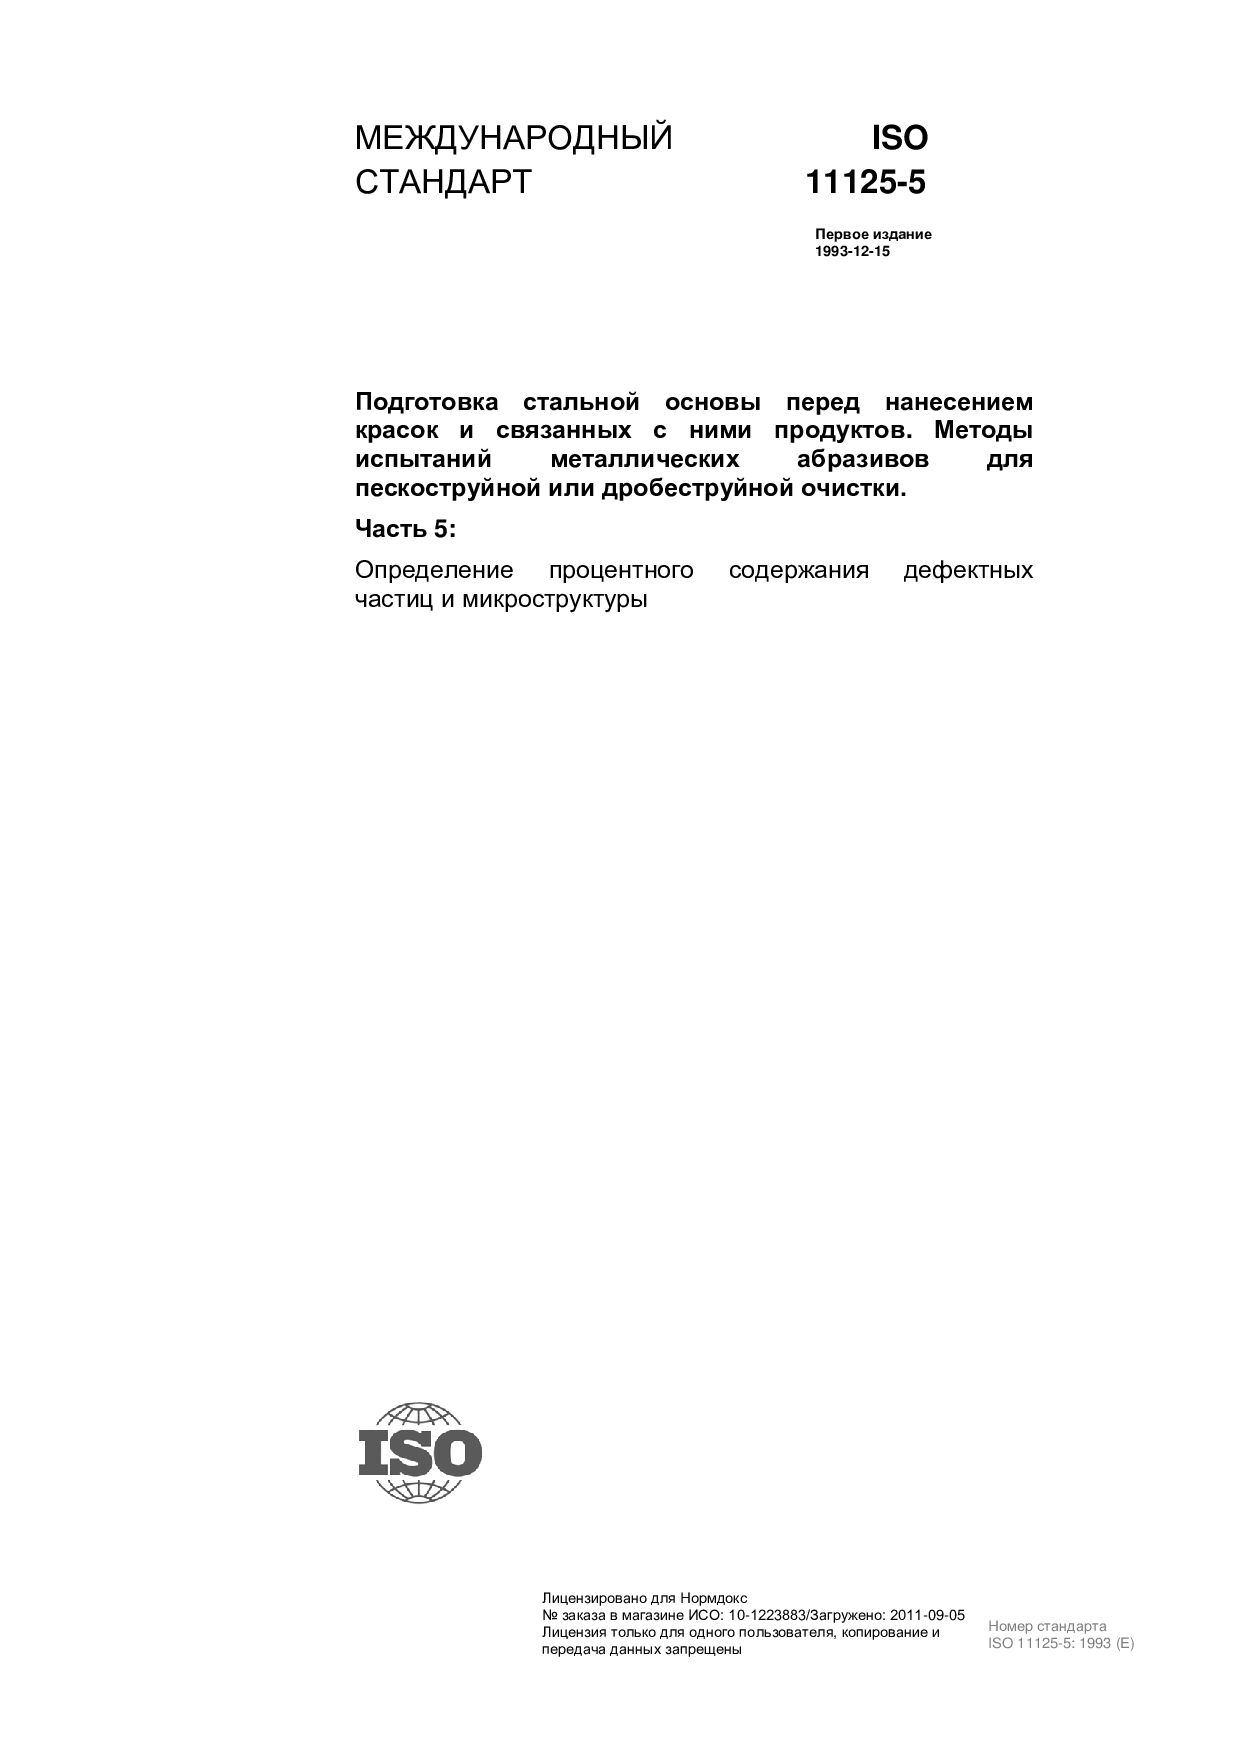 ISO 11125-5:1993封面图